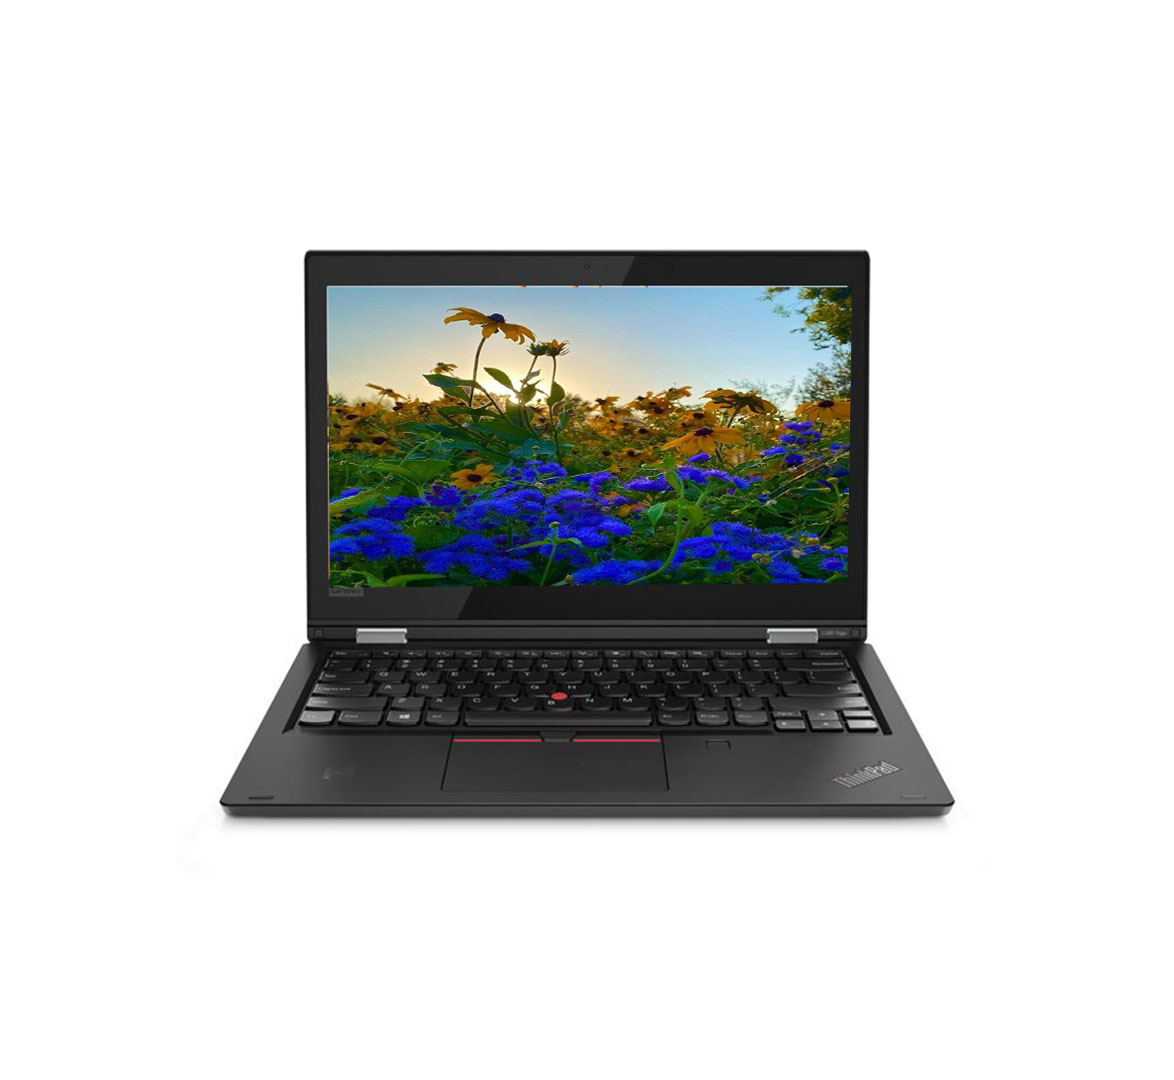 Lenovo ThinkPad L380 Yoga Business Laptop, Intel Core i5-8th Generation CPU, 8GB RAM, 256GB SSD, 13 inch Touchscreen 360°, Windows 10 Pro